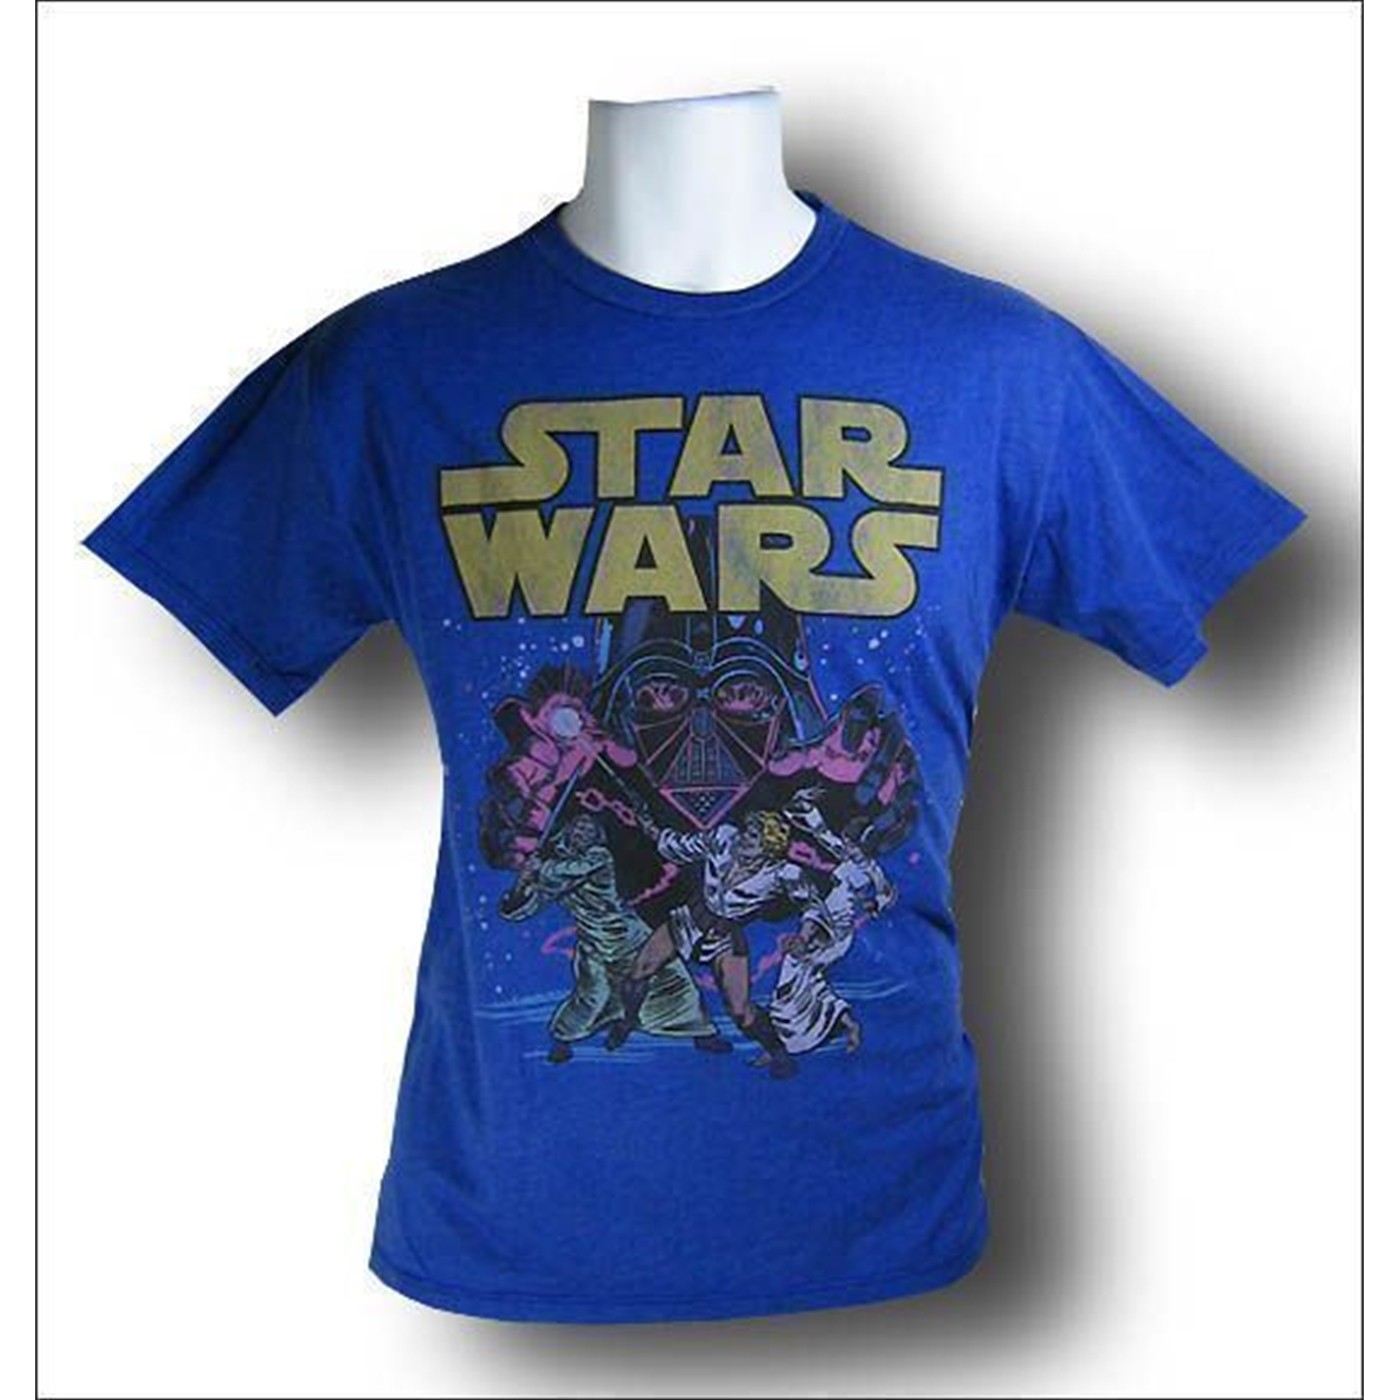 Star Wars Comic Blue T-shirt